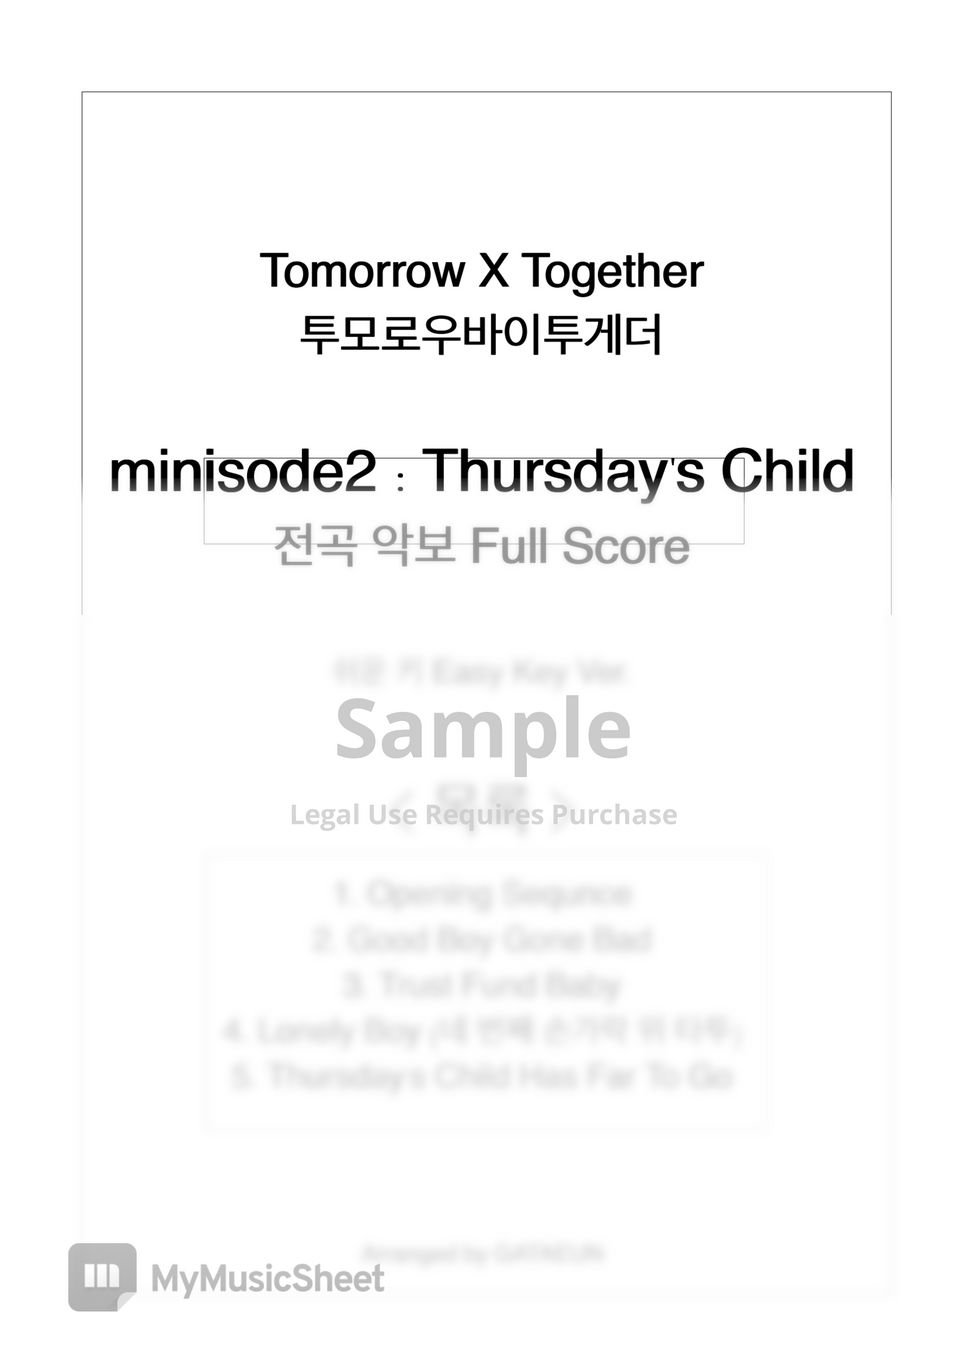 Tomorrow X Together - minisode2 Full Score Original Key + Easy Key by GATAEUN